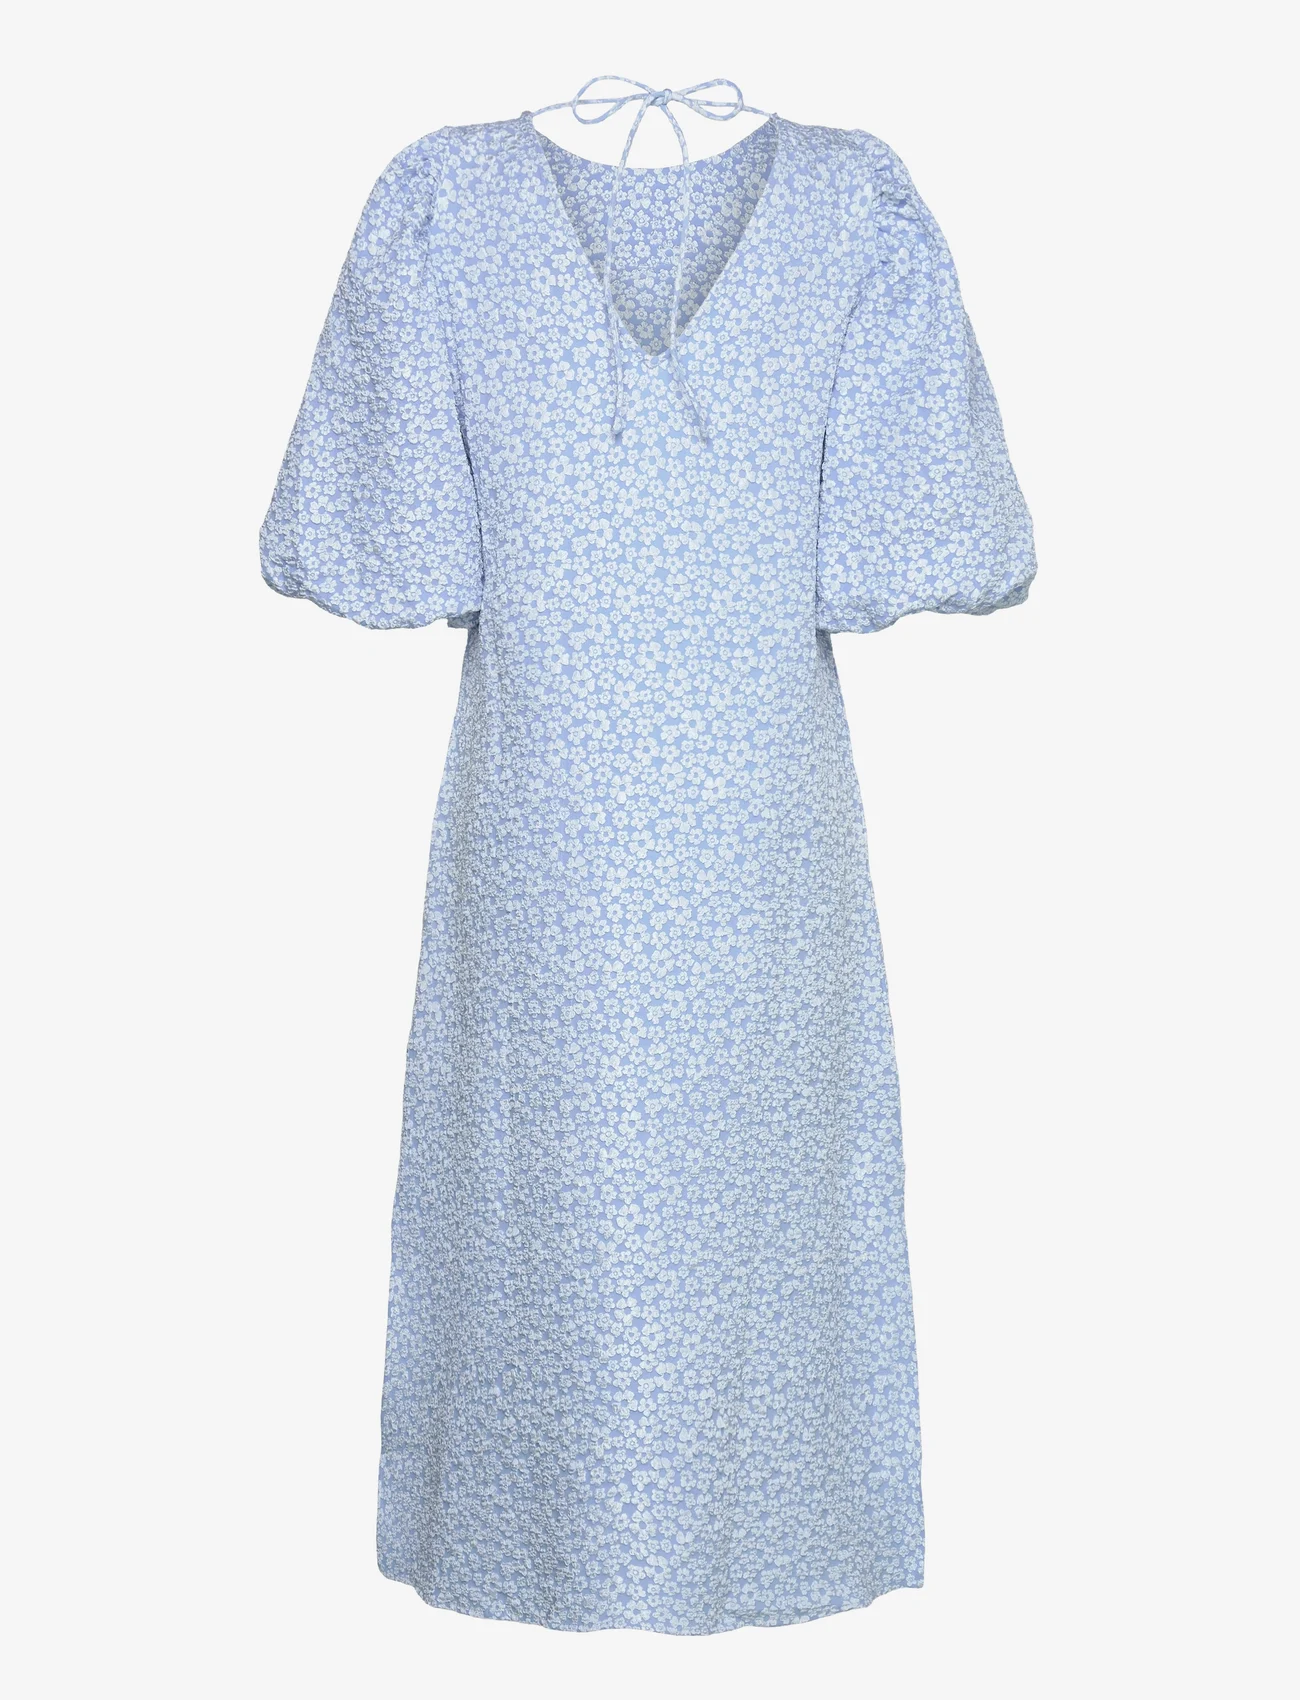 Noella - Reno Pastis Long Dress - midikjoler - light blue - 1